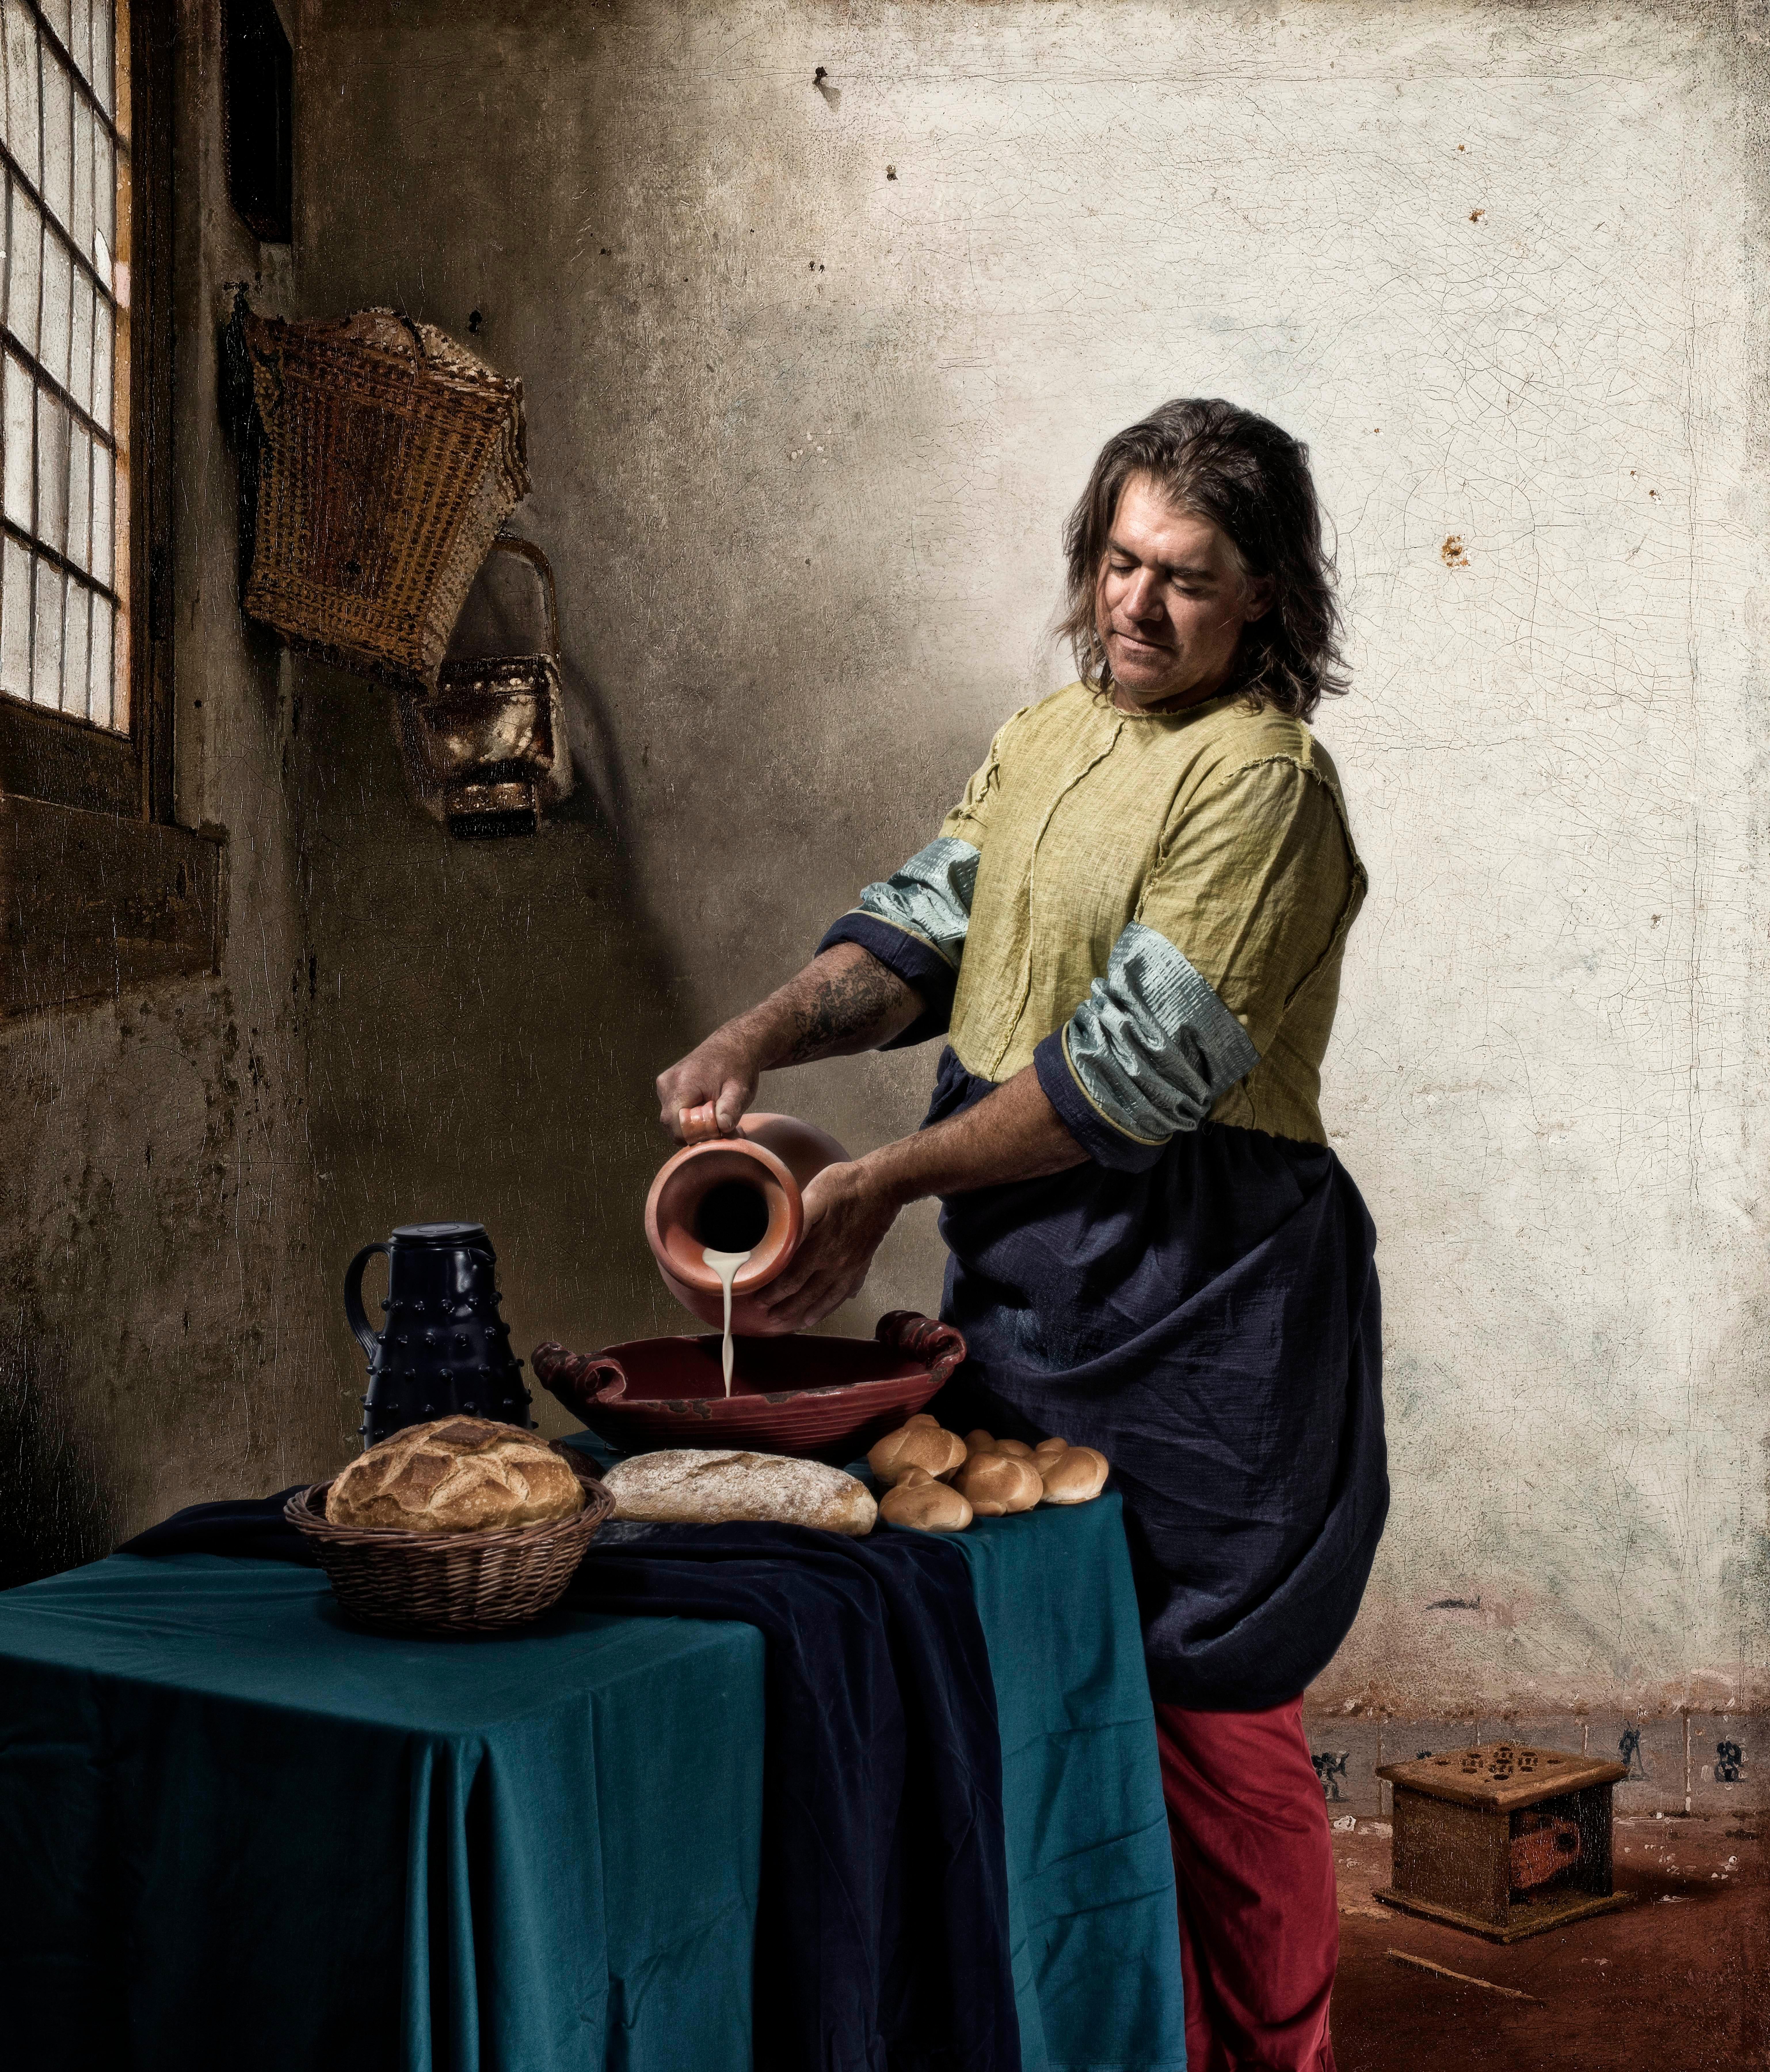 E2 - Kleinveld & Julien Portrait Photograph - The Milkman, Ode to Vermeer's The Milkmaid